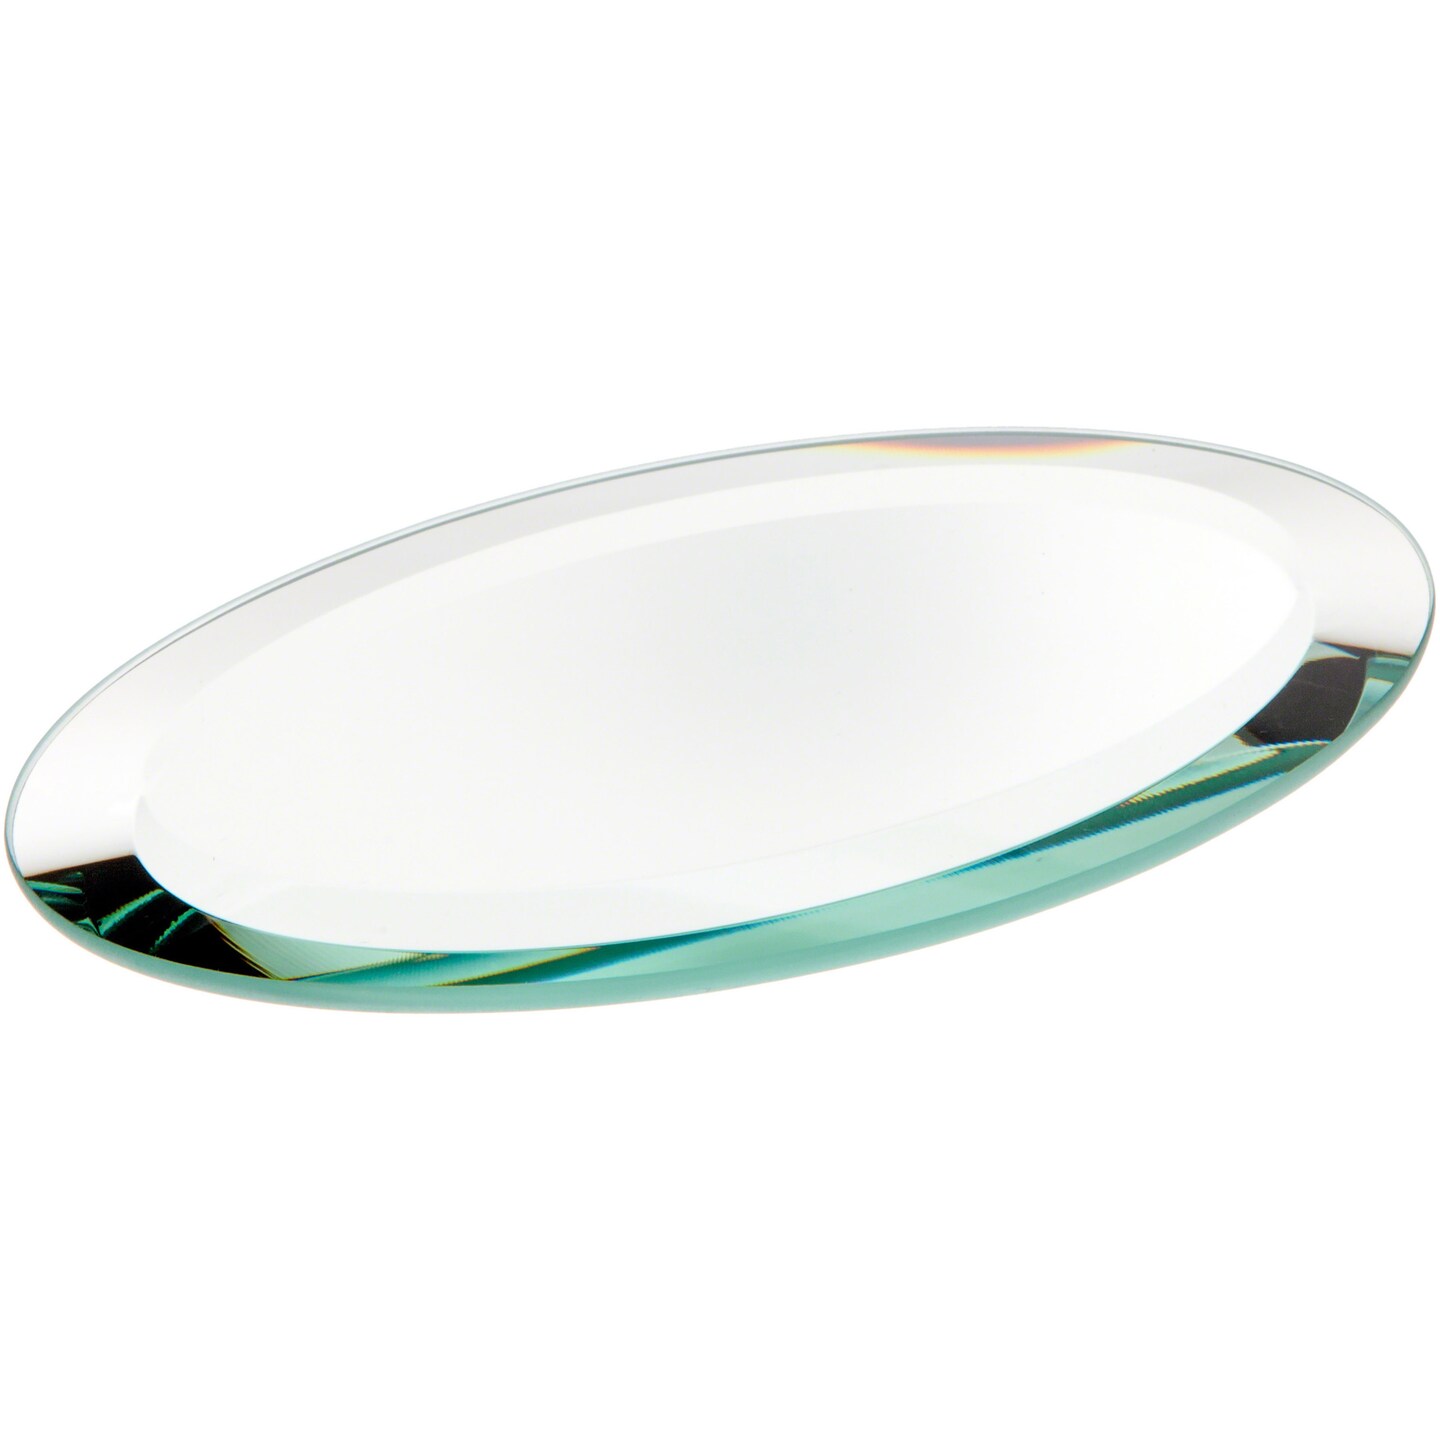 Plymor Oval 5mm Beveled Glass Mirror, 3 inch x 5 inch